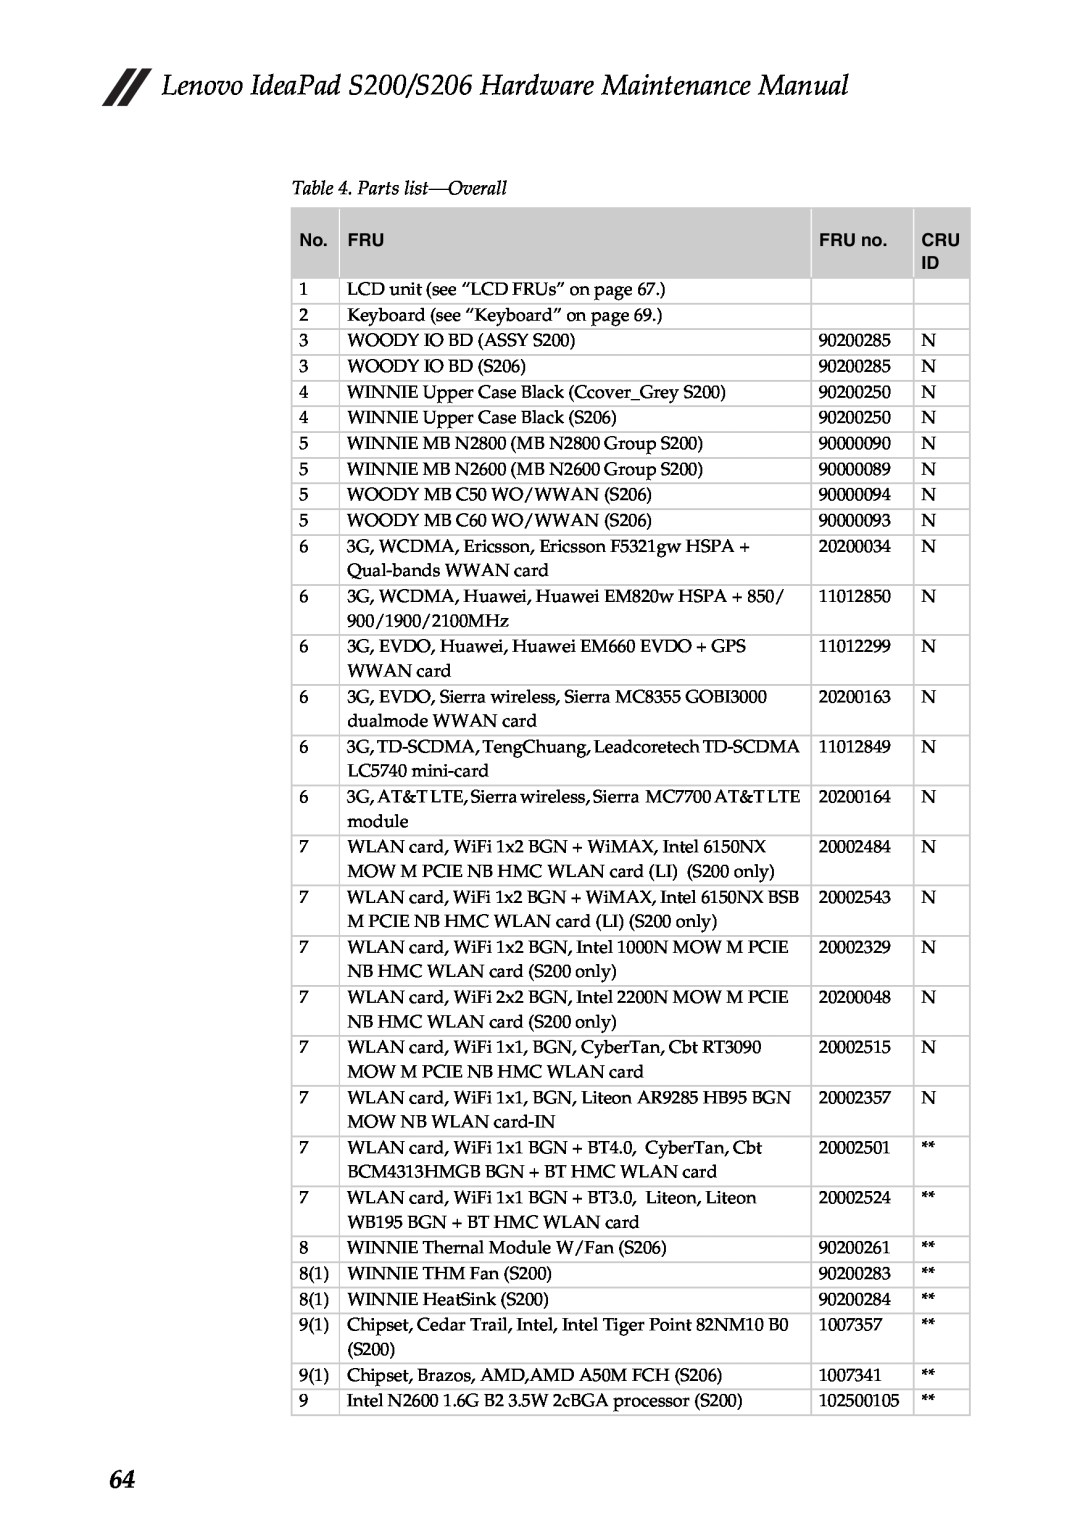 Lenovo S206, S200 manual Parts list-Overall, FRU no 